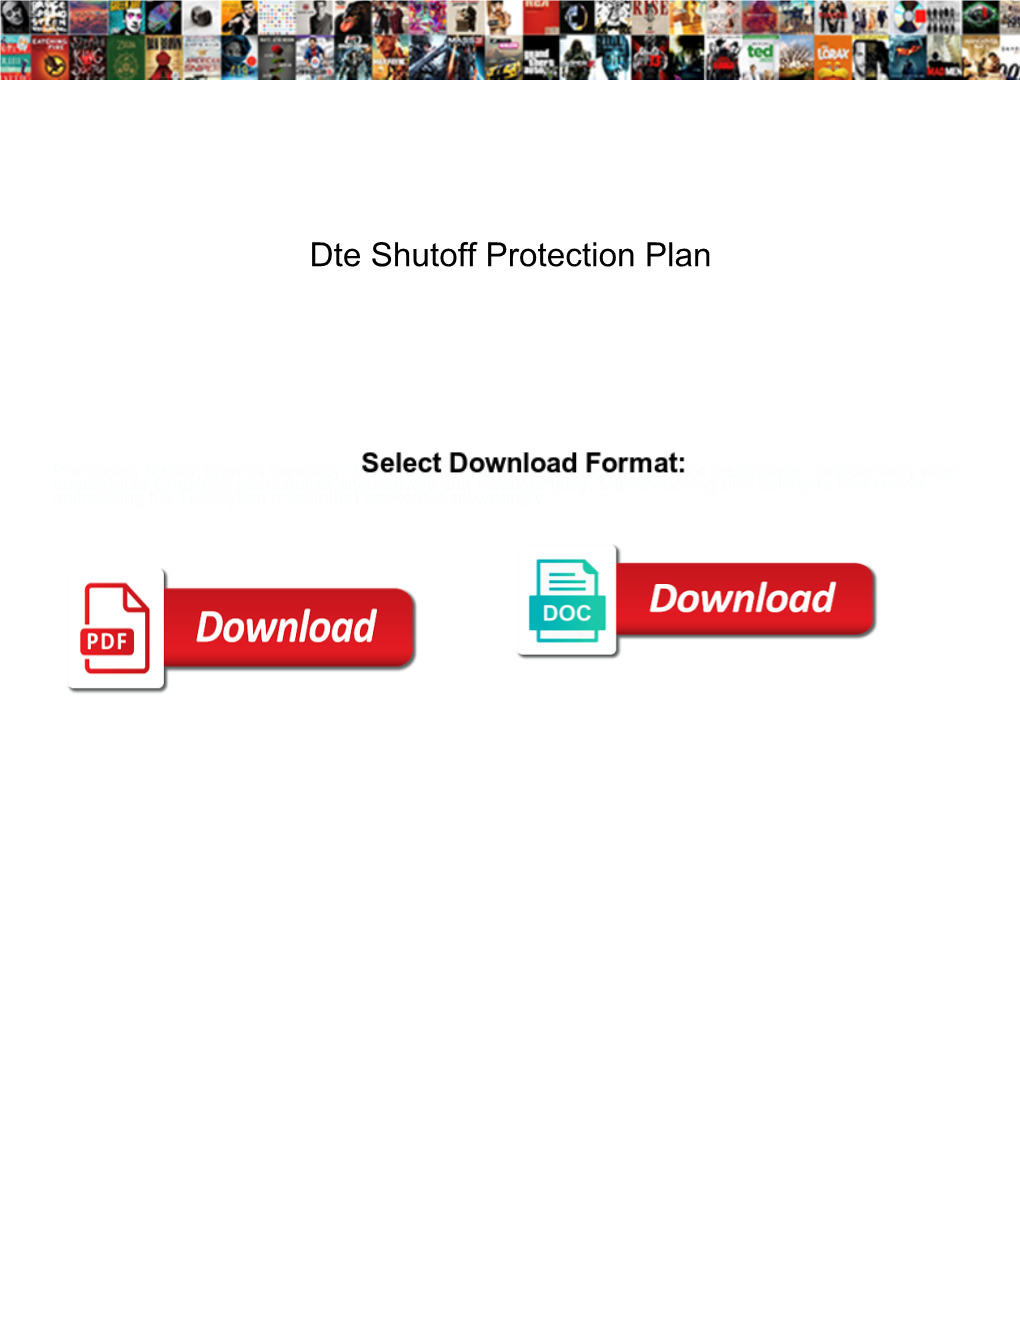 Dte Shutoff Protection Plan